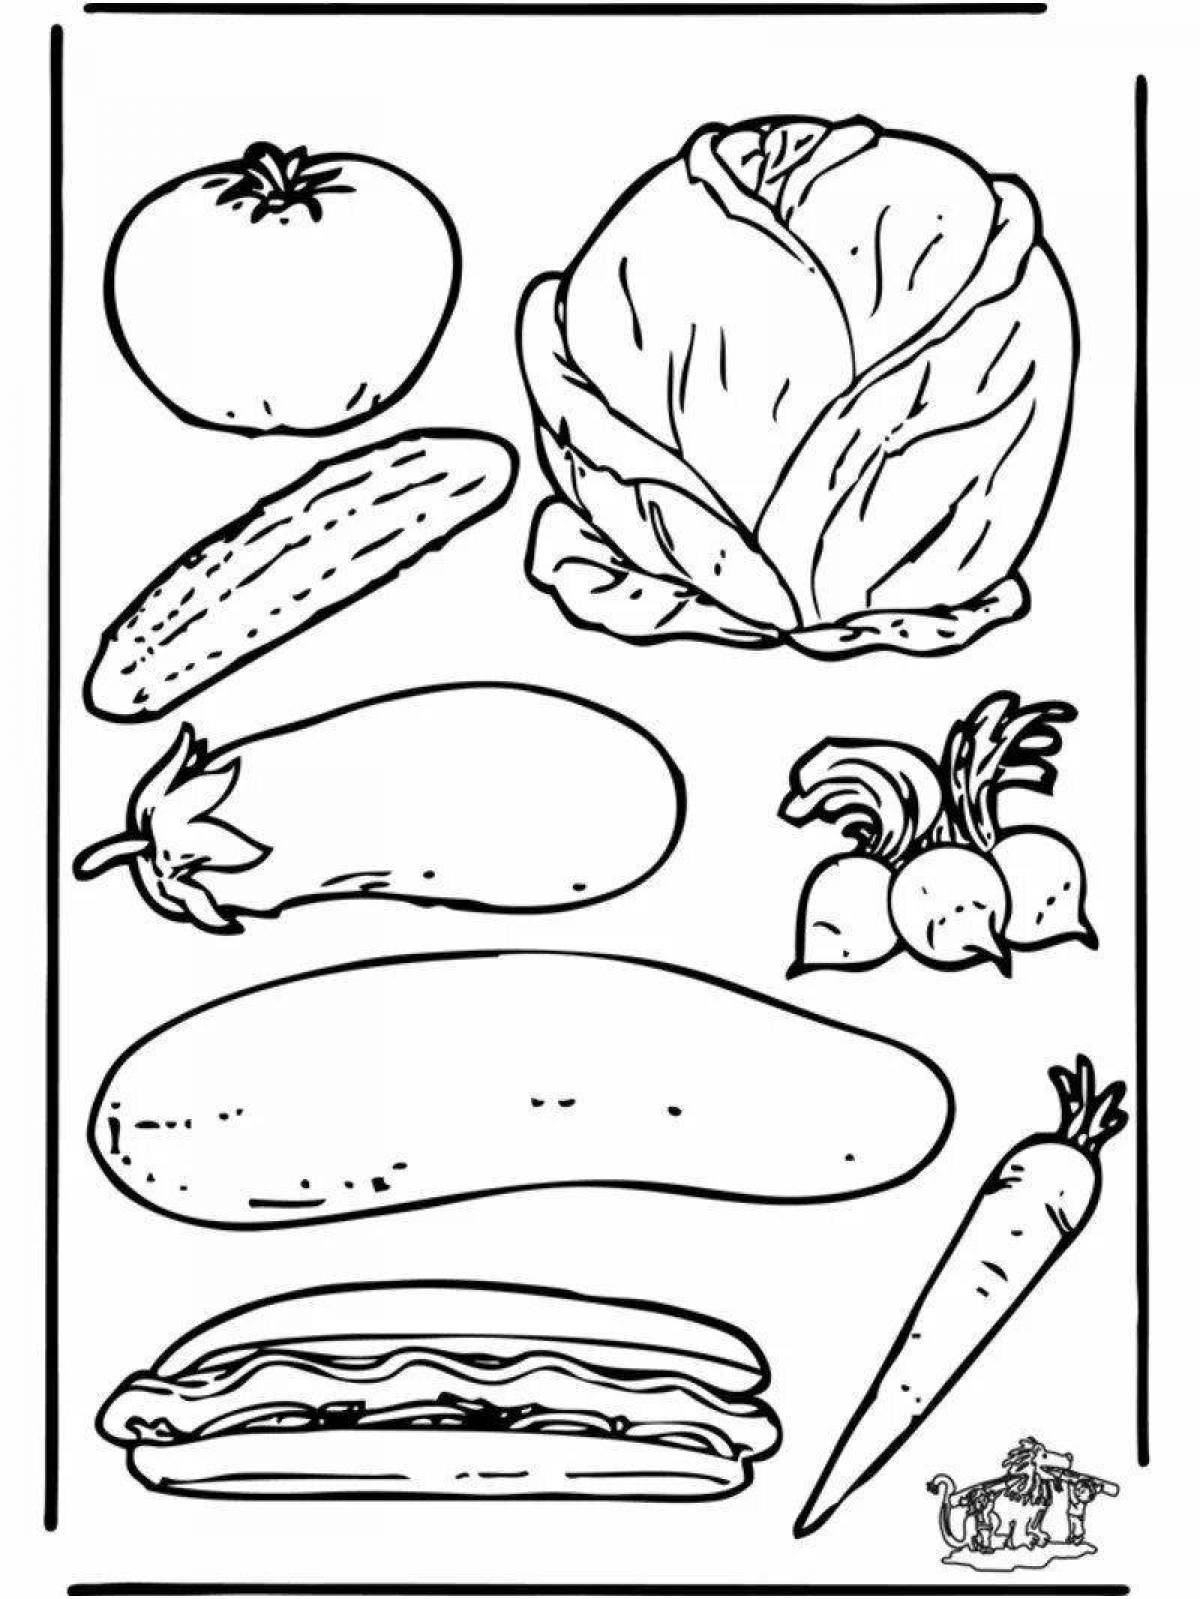 Delightful vegetable coloring book for preschoolers 2-3